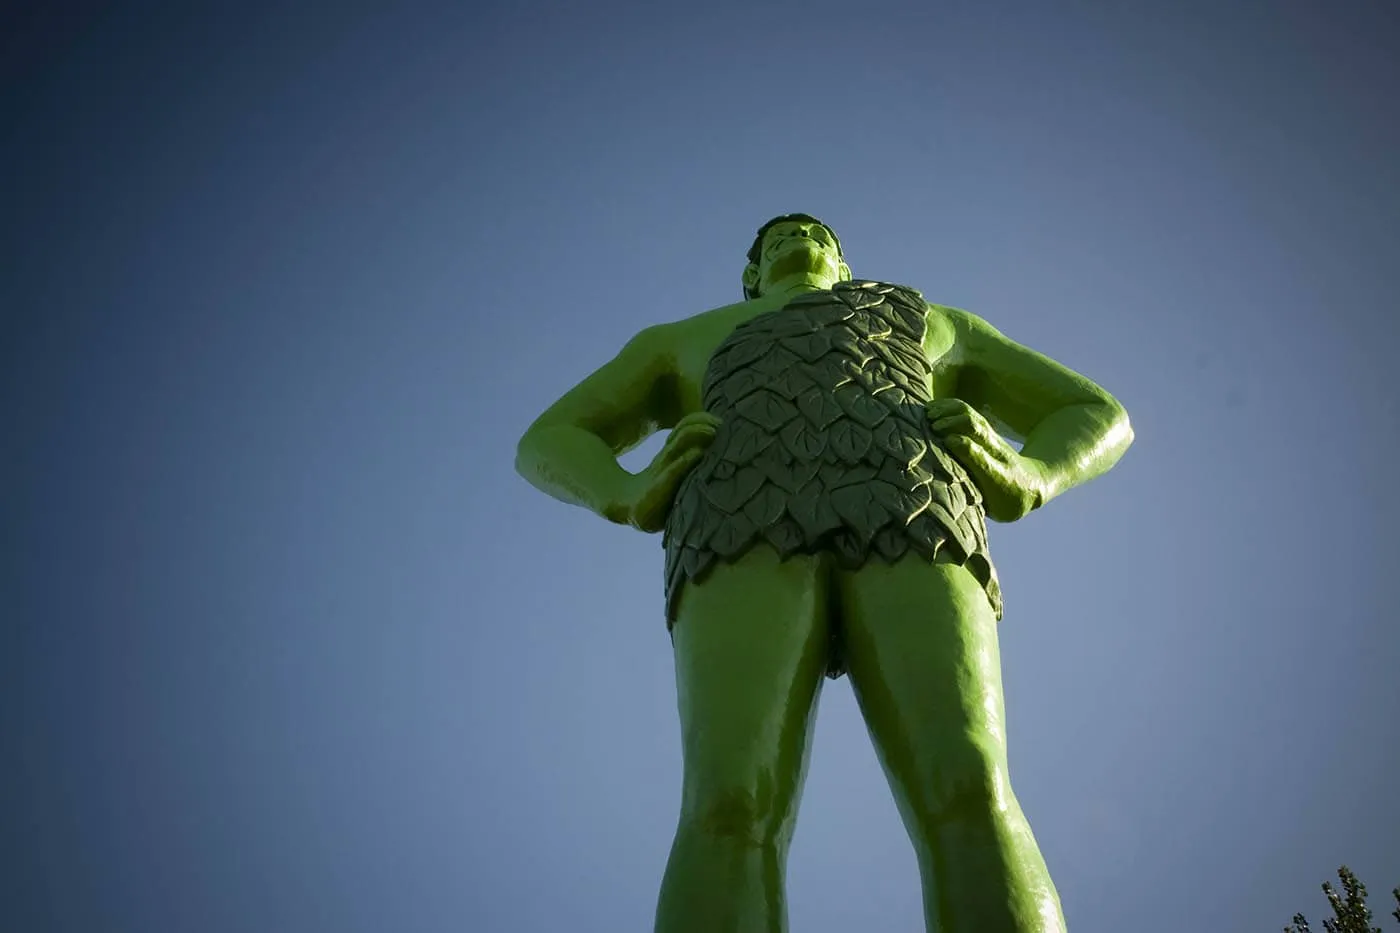 Jolly Green Giant statue in Blue Earth, Minnesota